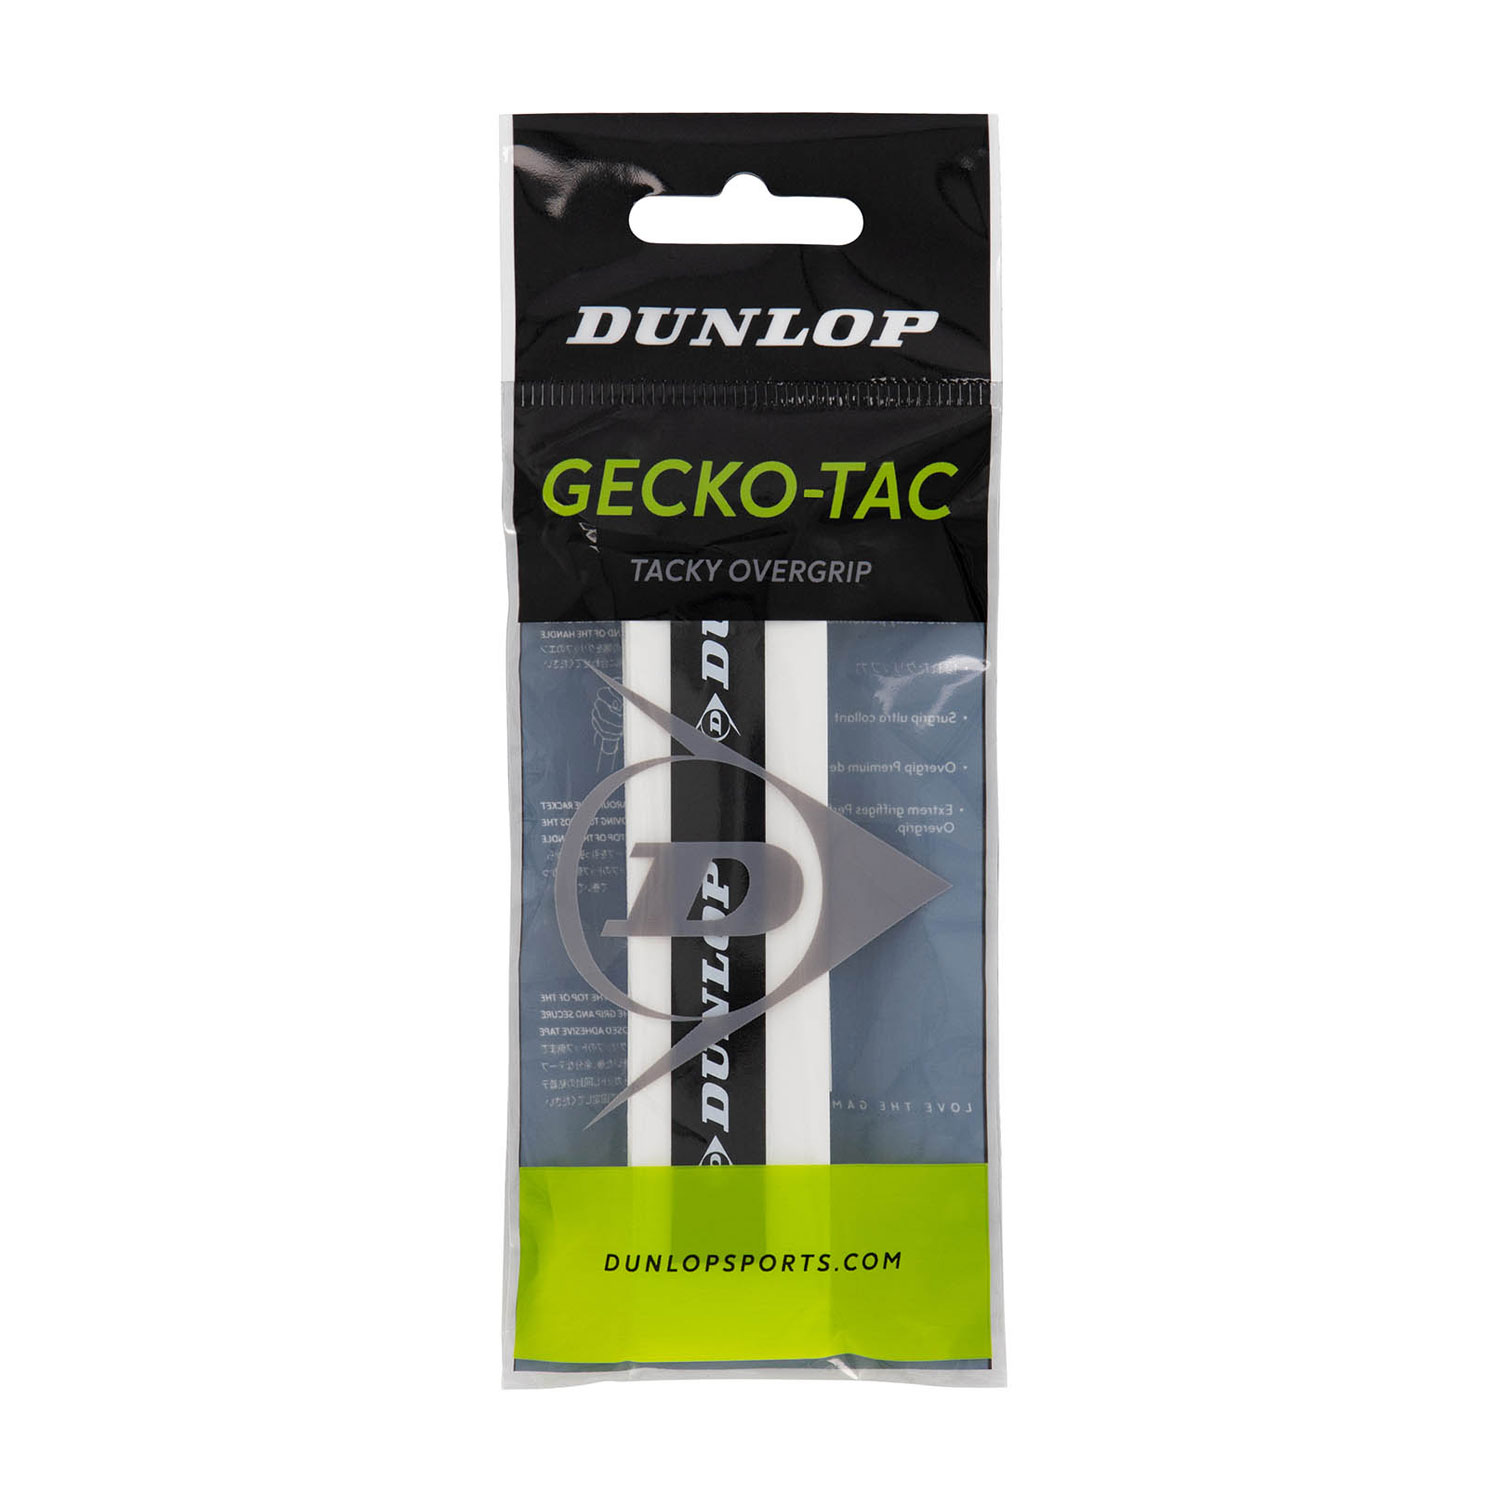 Dunlop Gecko-Tac Overgrip - White